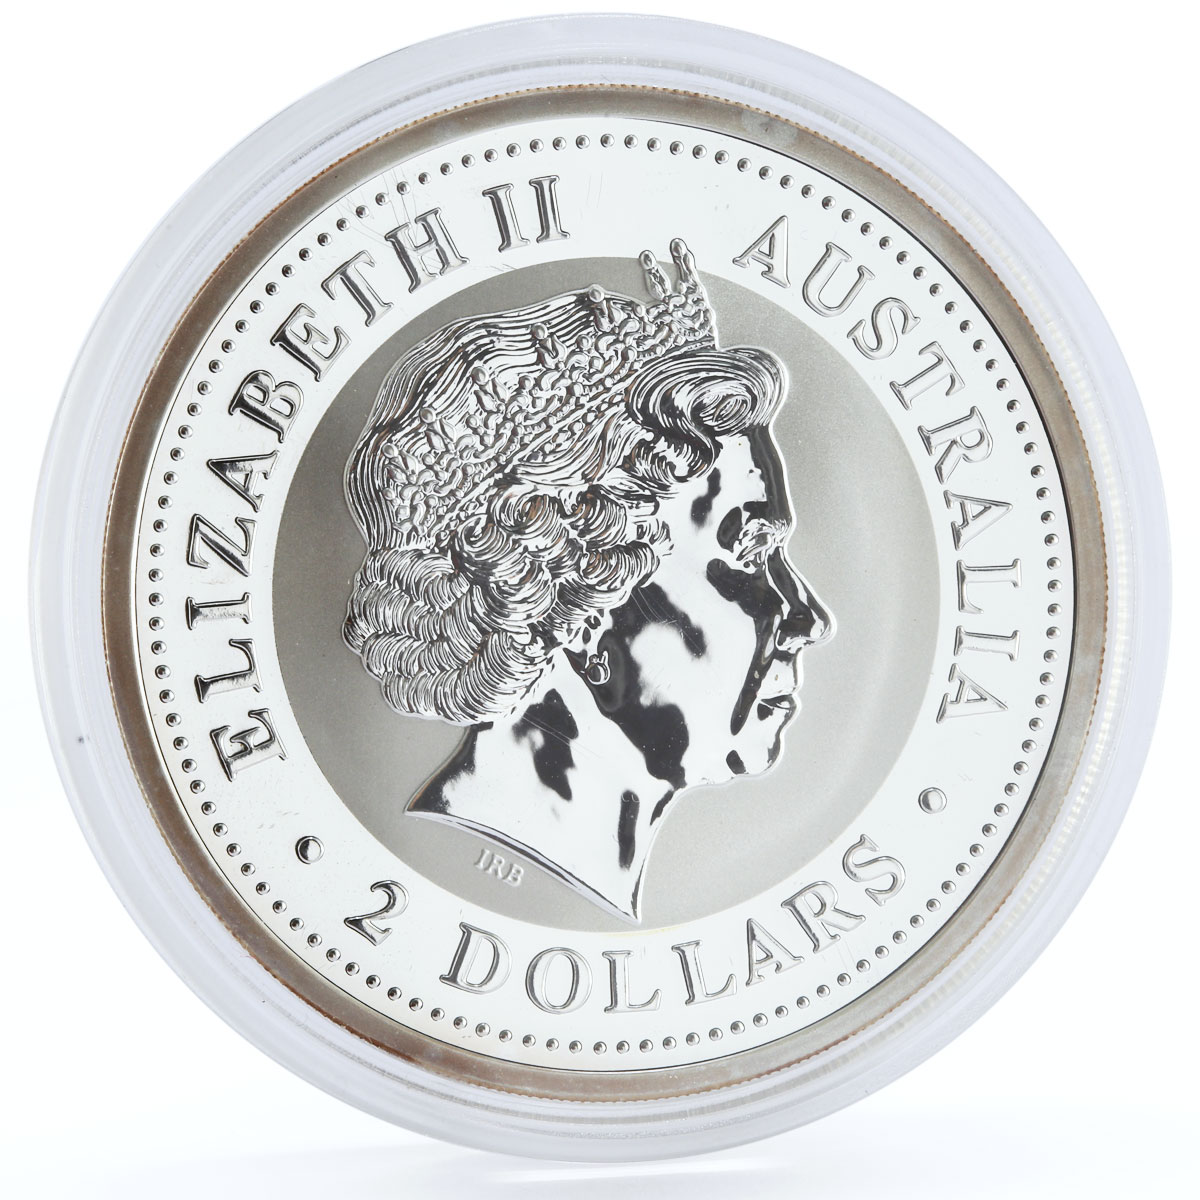 Australia 2 dollars Lunar Calendar series I Year of the Goat silver coin 2003